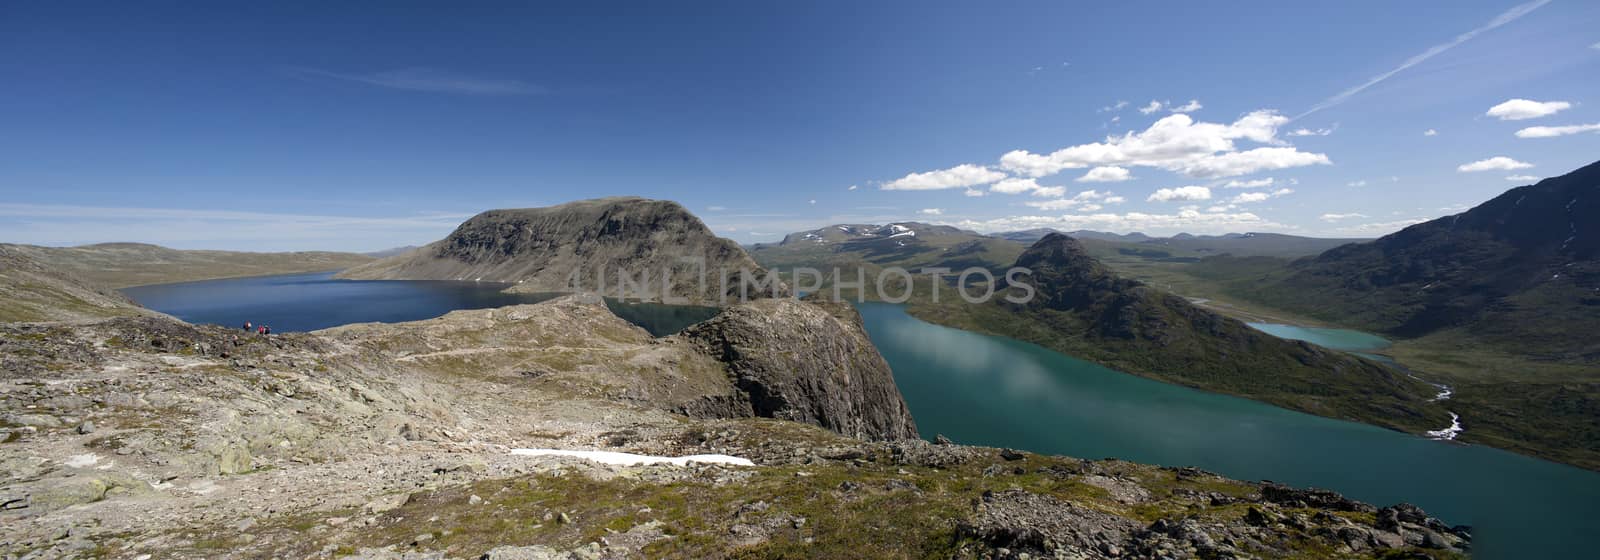 Besseggen Ridge in Jotunheimen National Park, Norway by slunicko1977